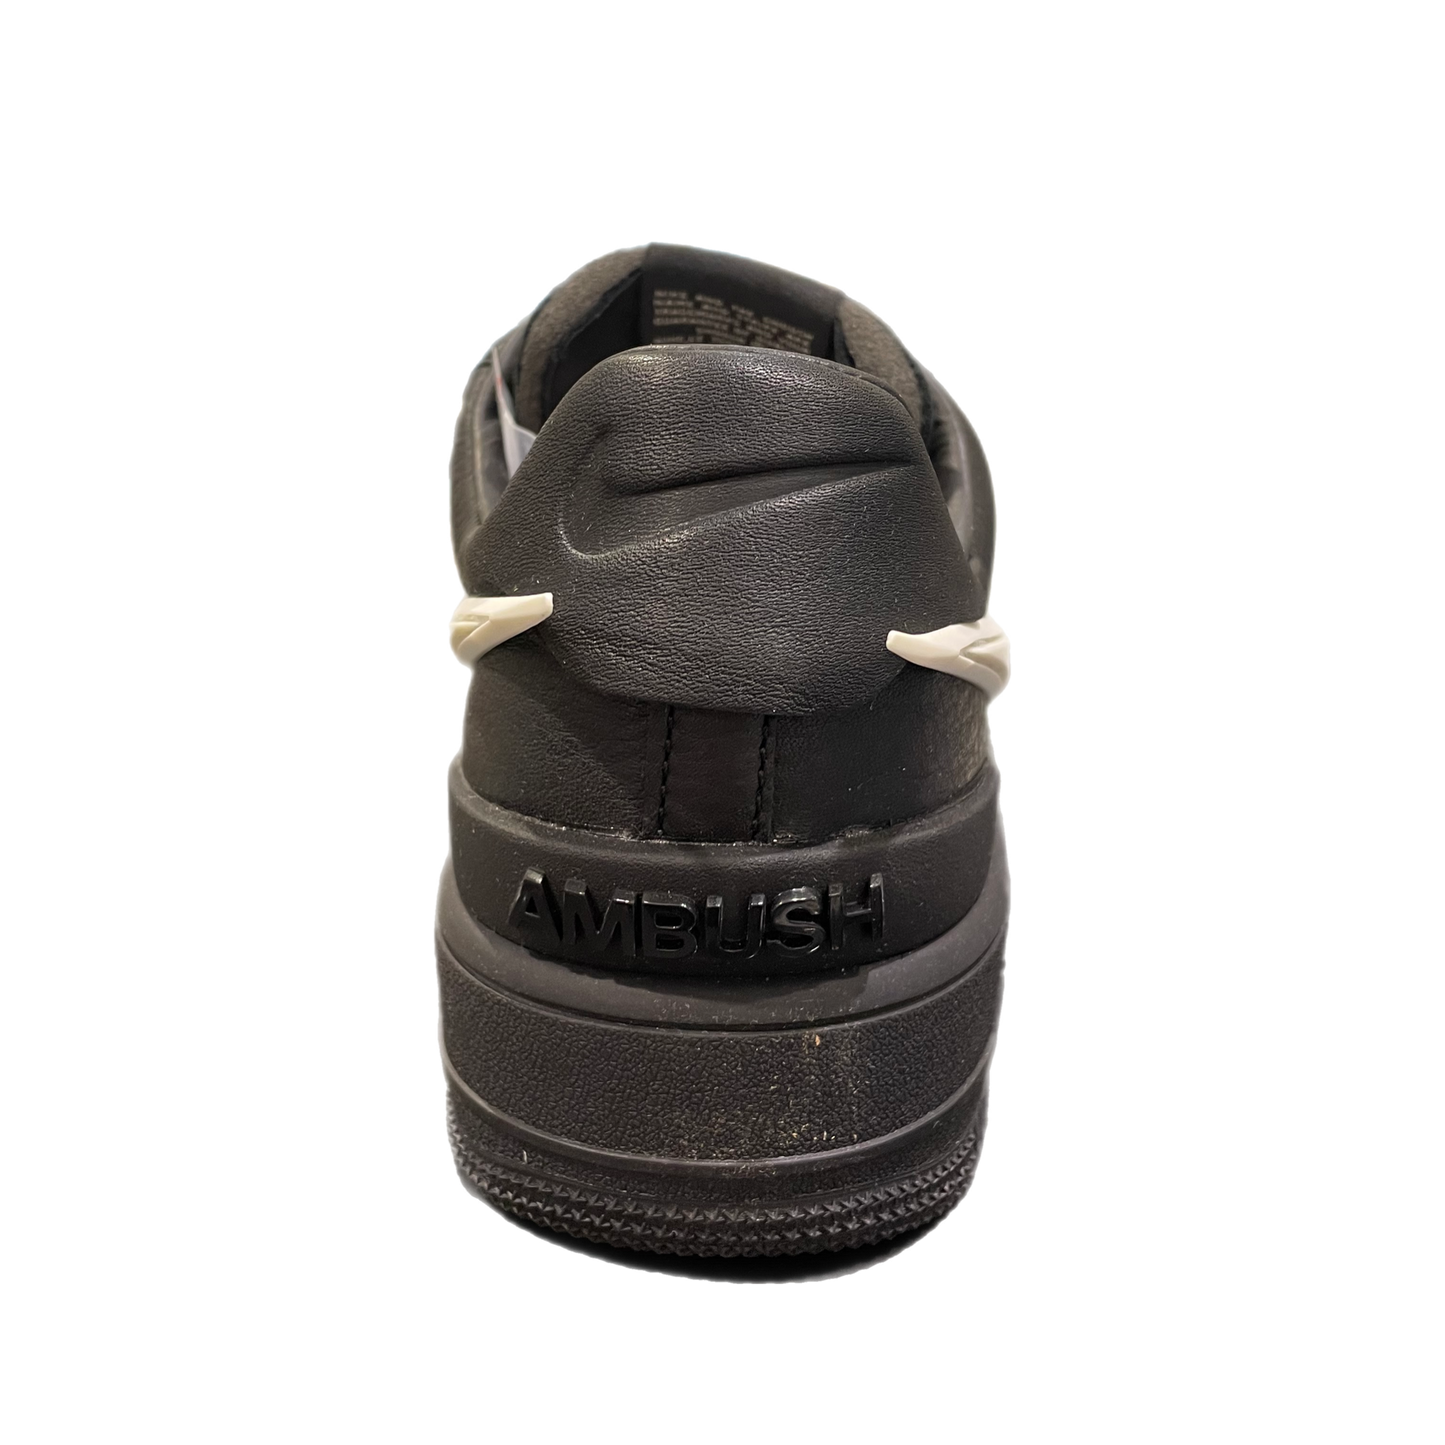 Nike - "Ambush AF1 Black" - Size 11